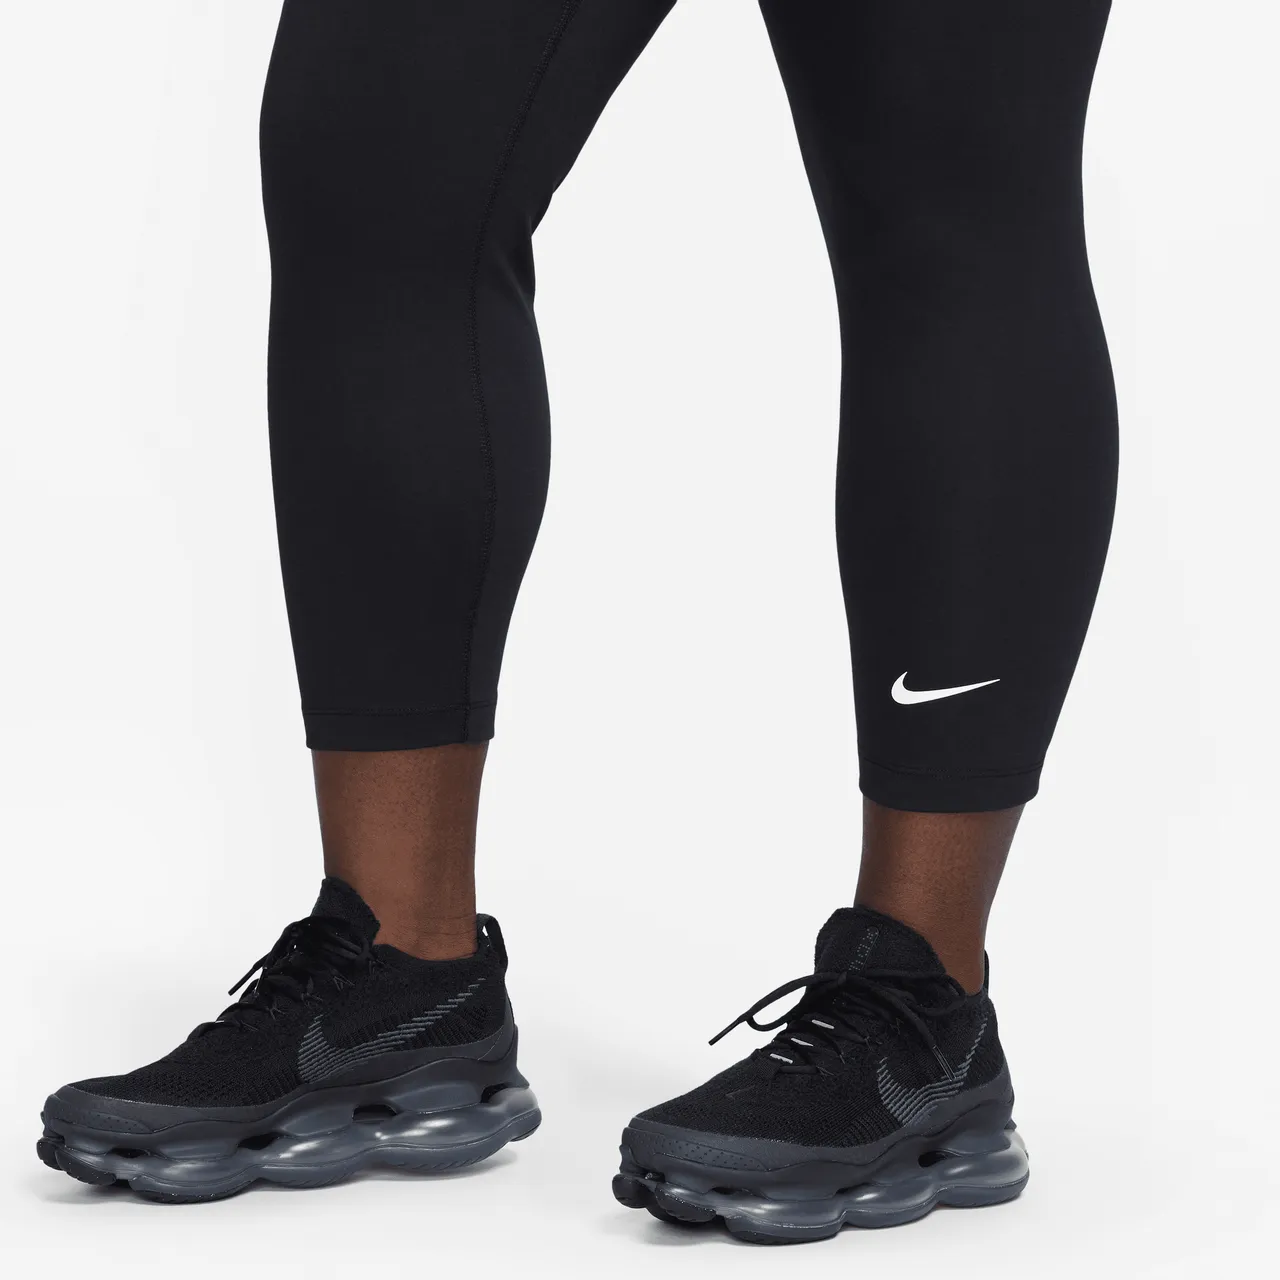 Nike Sportswear Classic Women's High-Waisted 7/8 Leggings - Black - Polyester